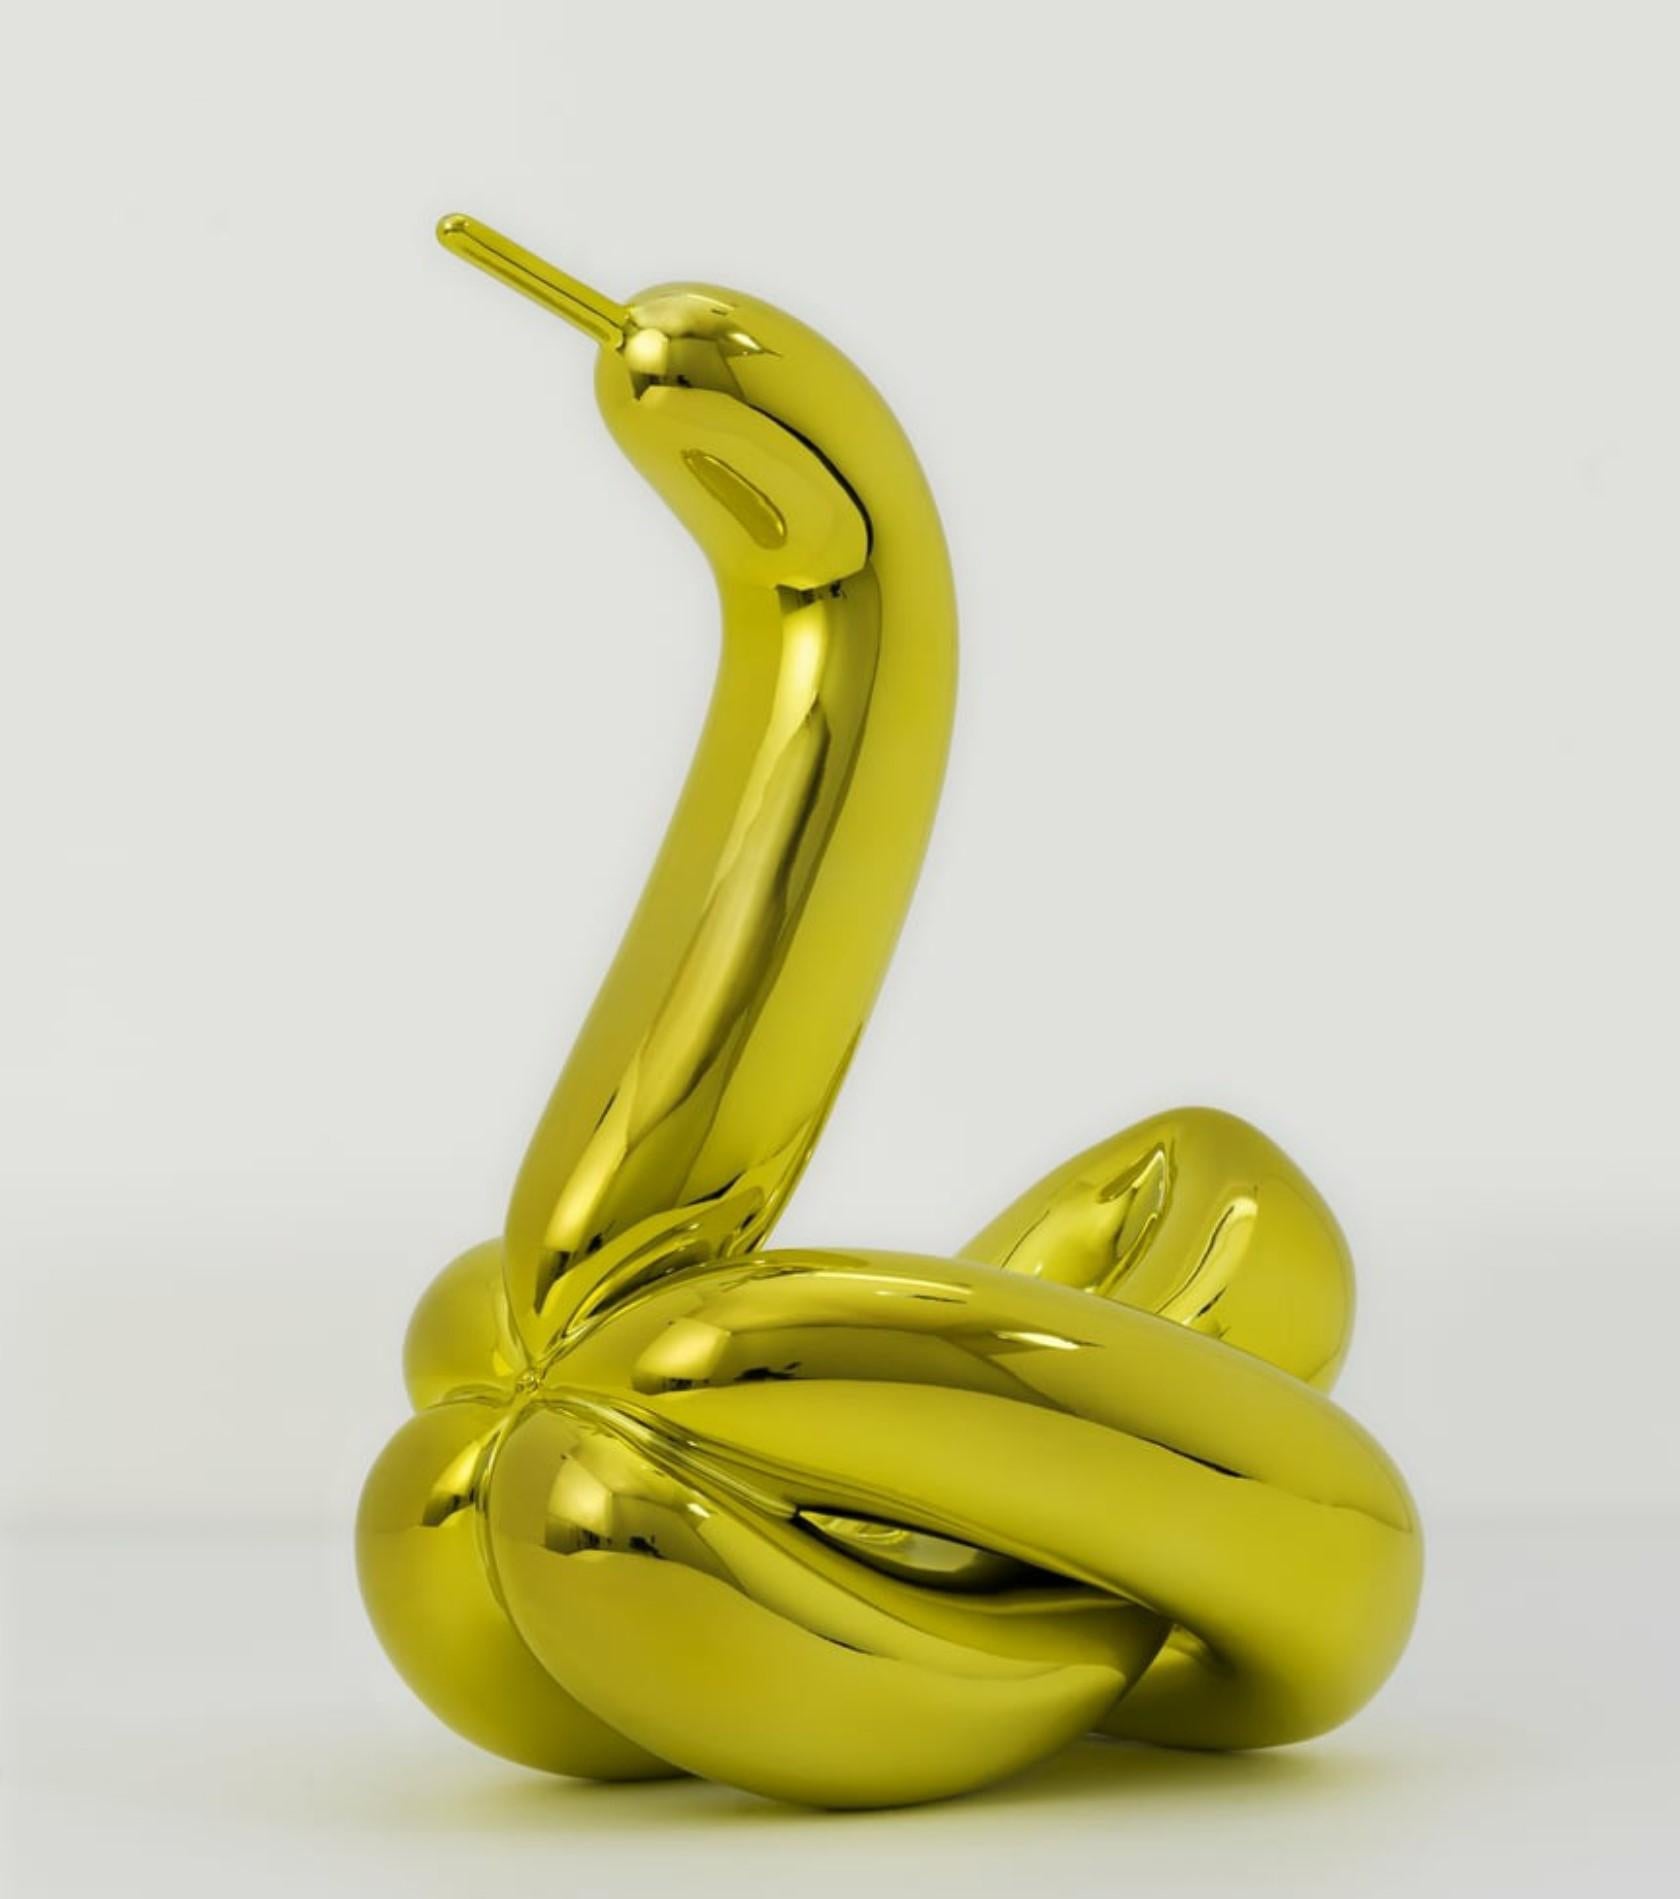 Ballon Swan Yellow - Sculpture by Jeff Koons